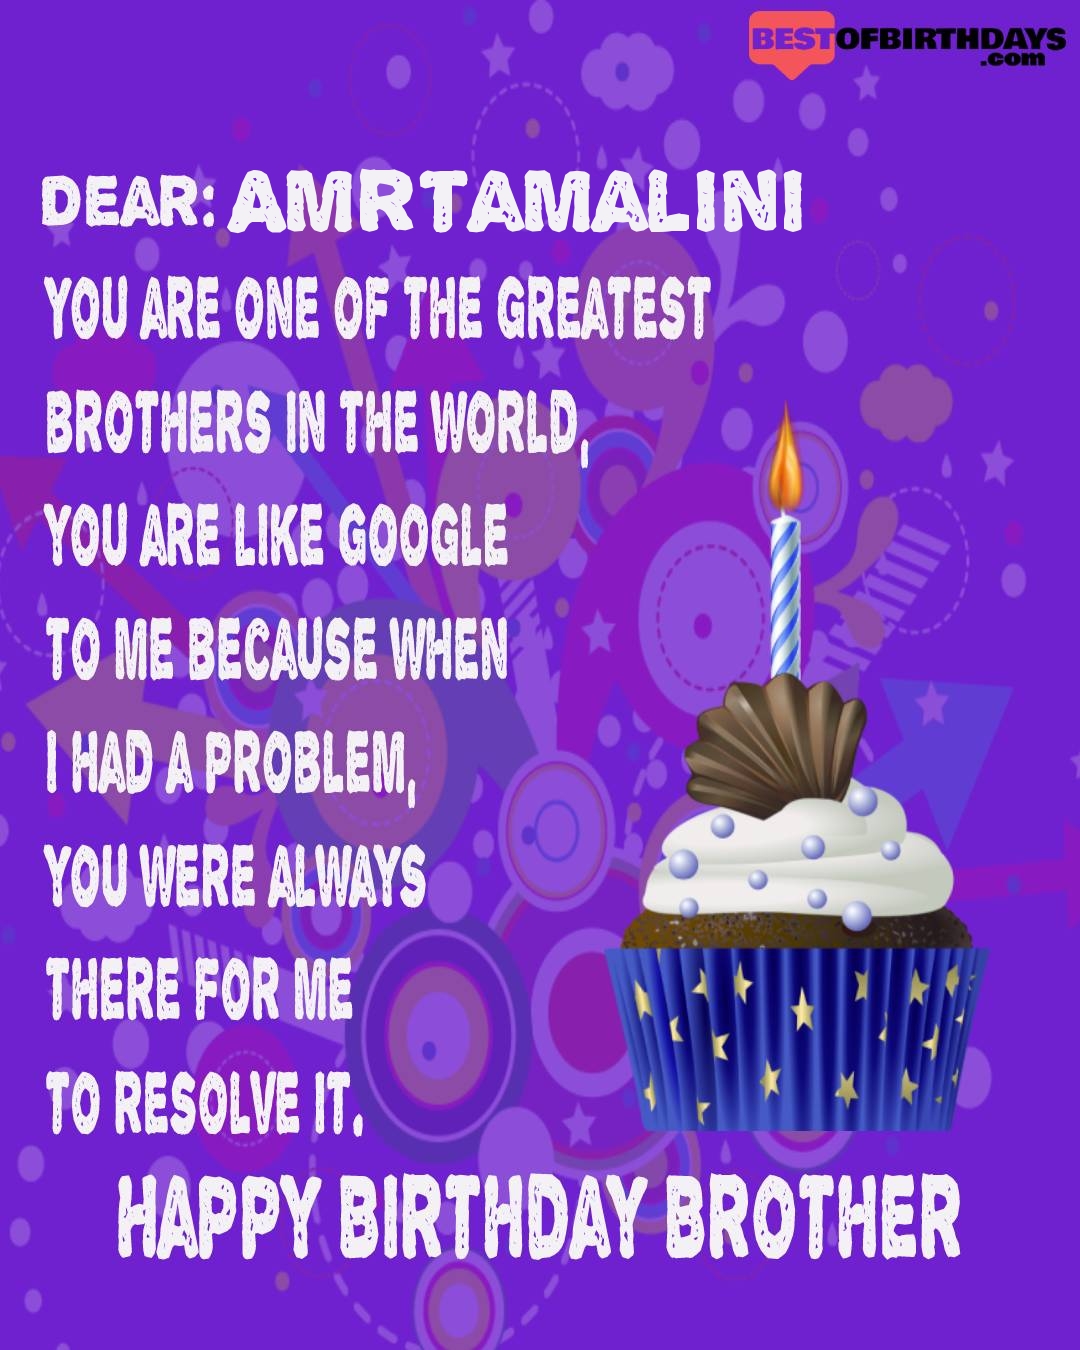 Happy birthday amrtamalini bhai brother bro